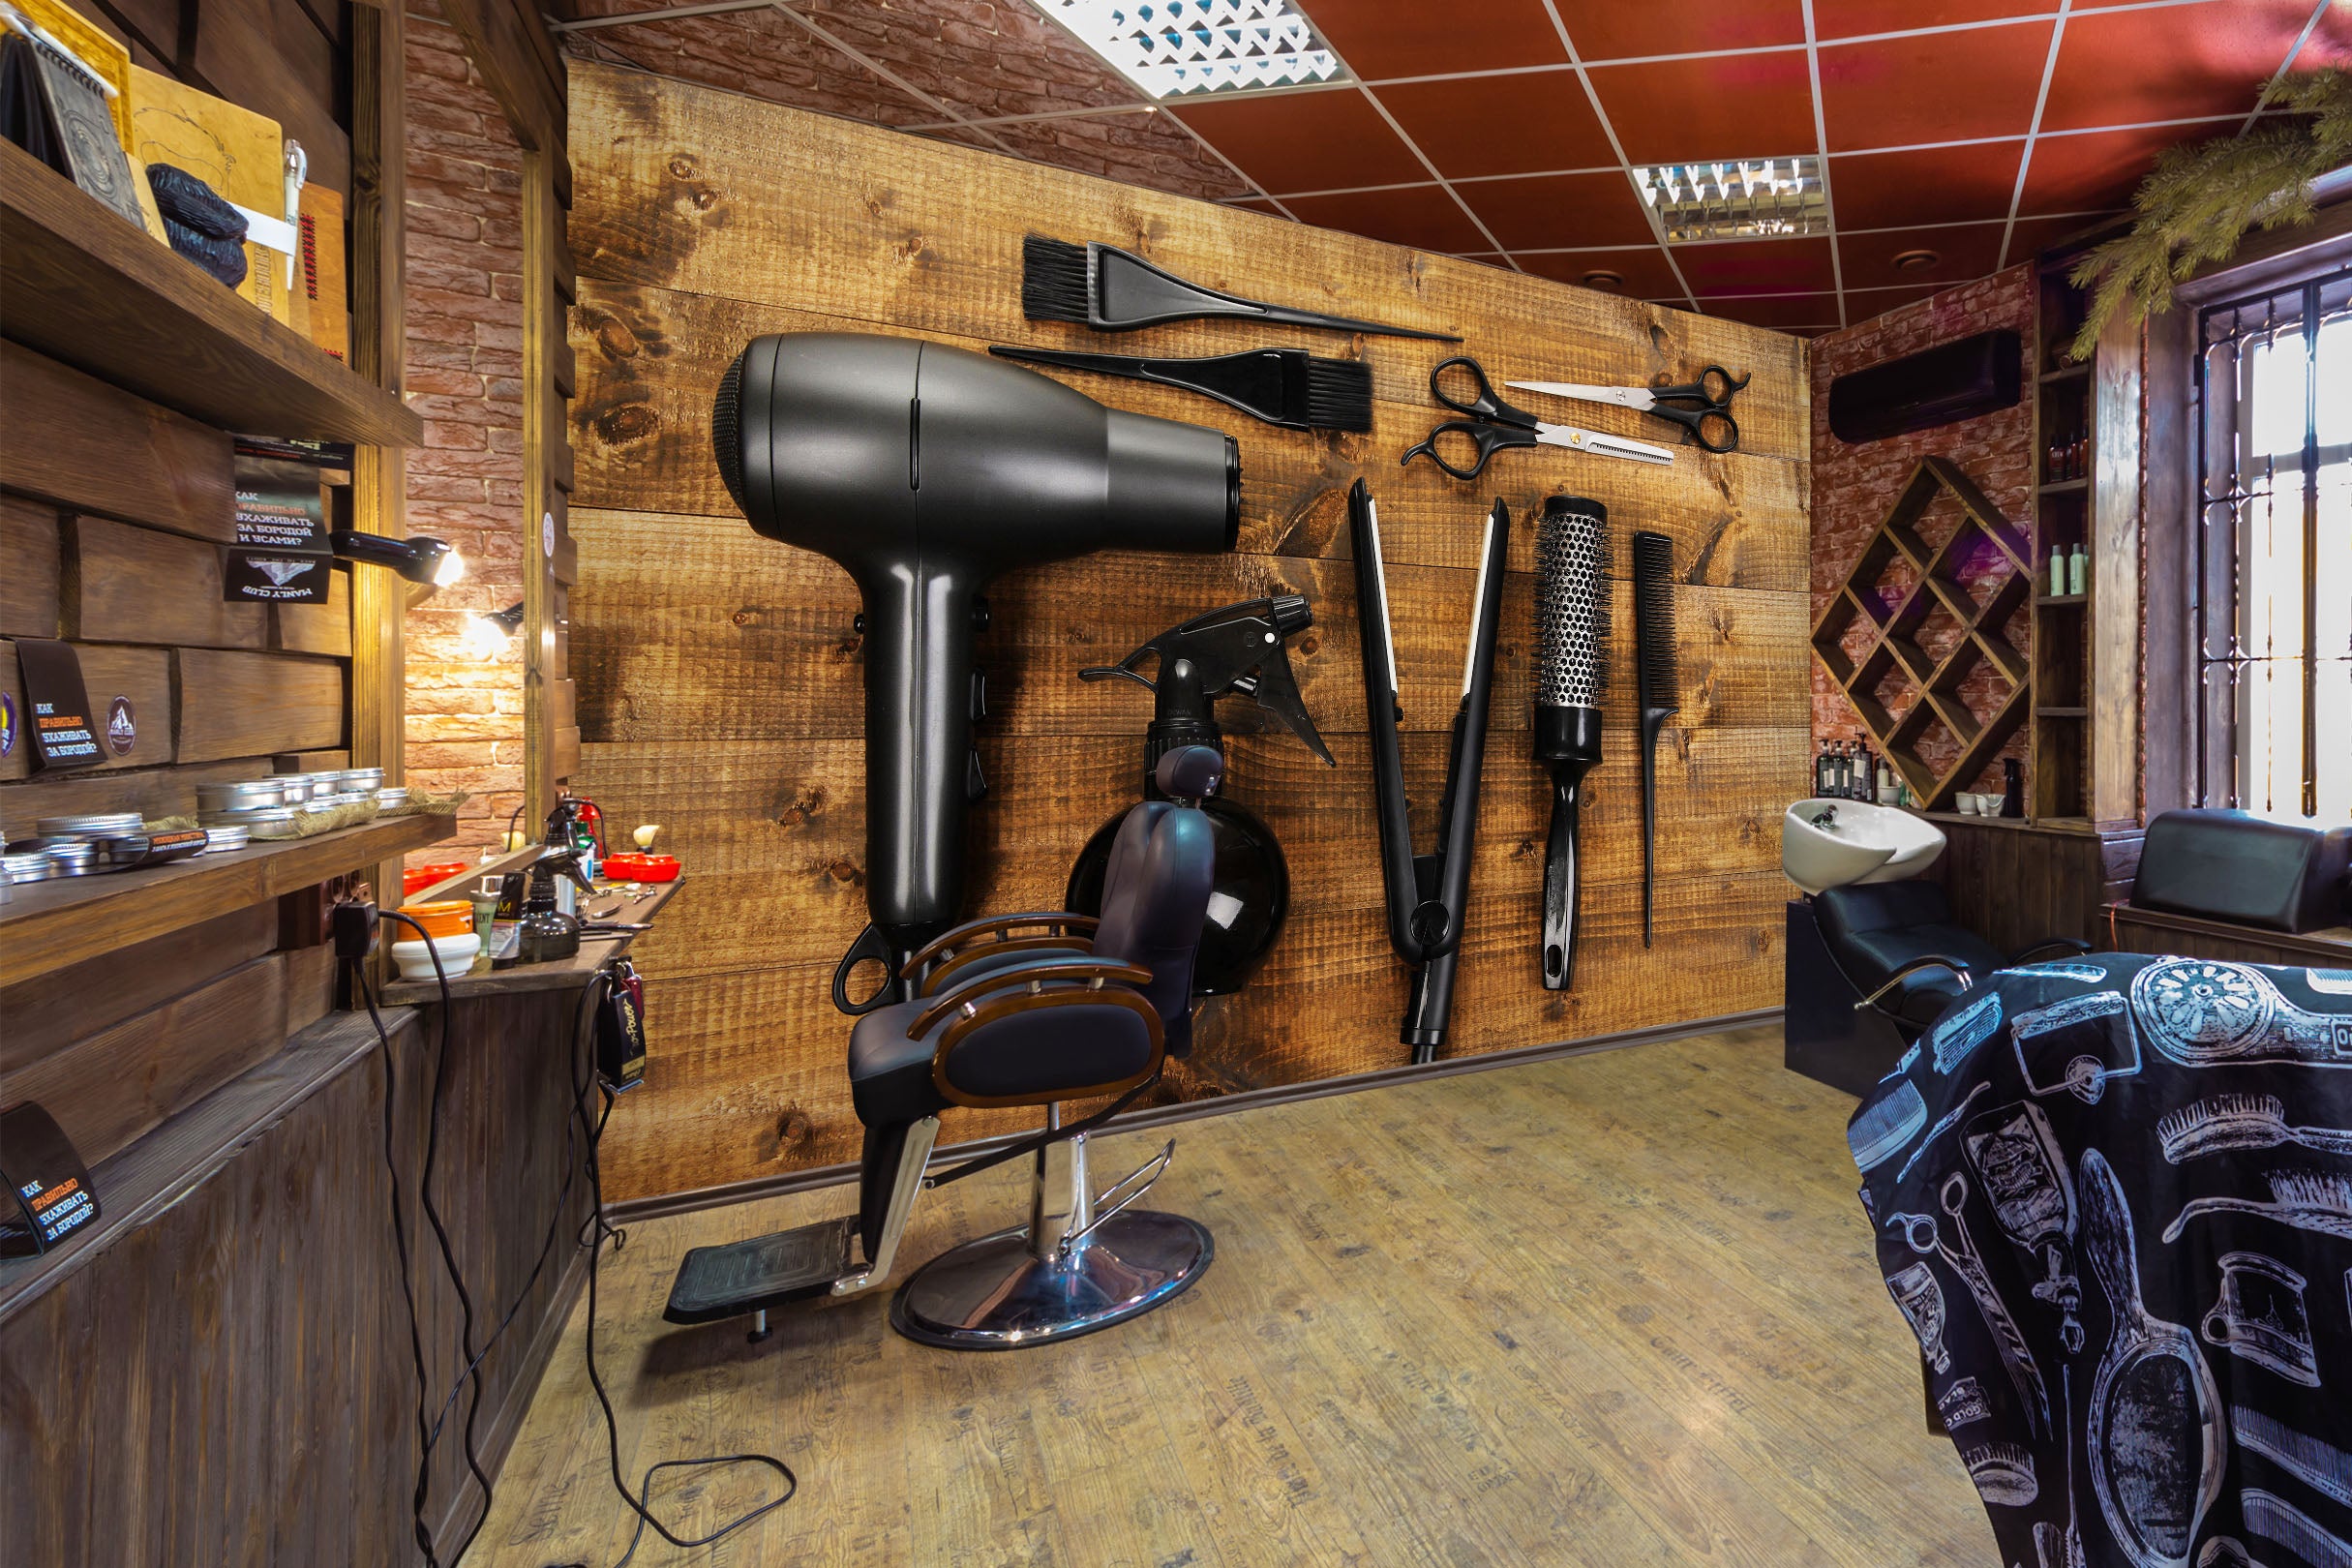 3D Hair Dryer Comb Splint 115131 Barber Shop Wall Murals